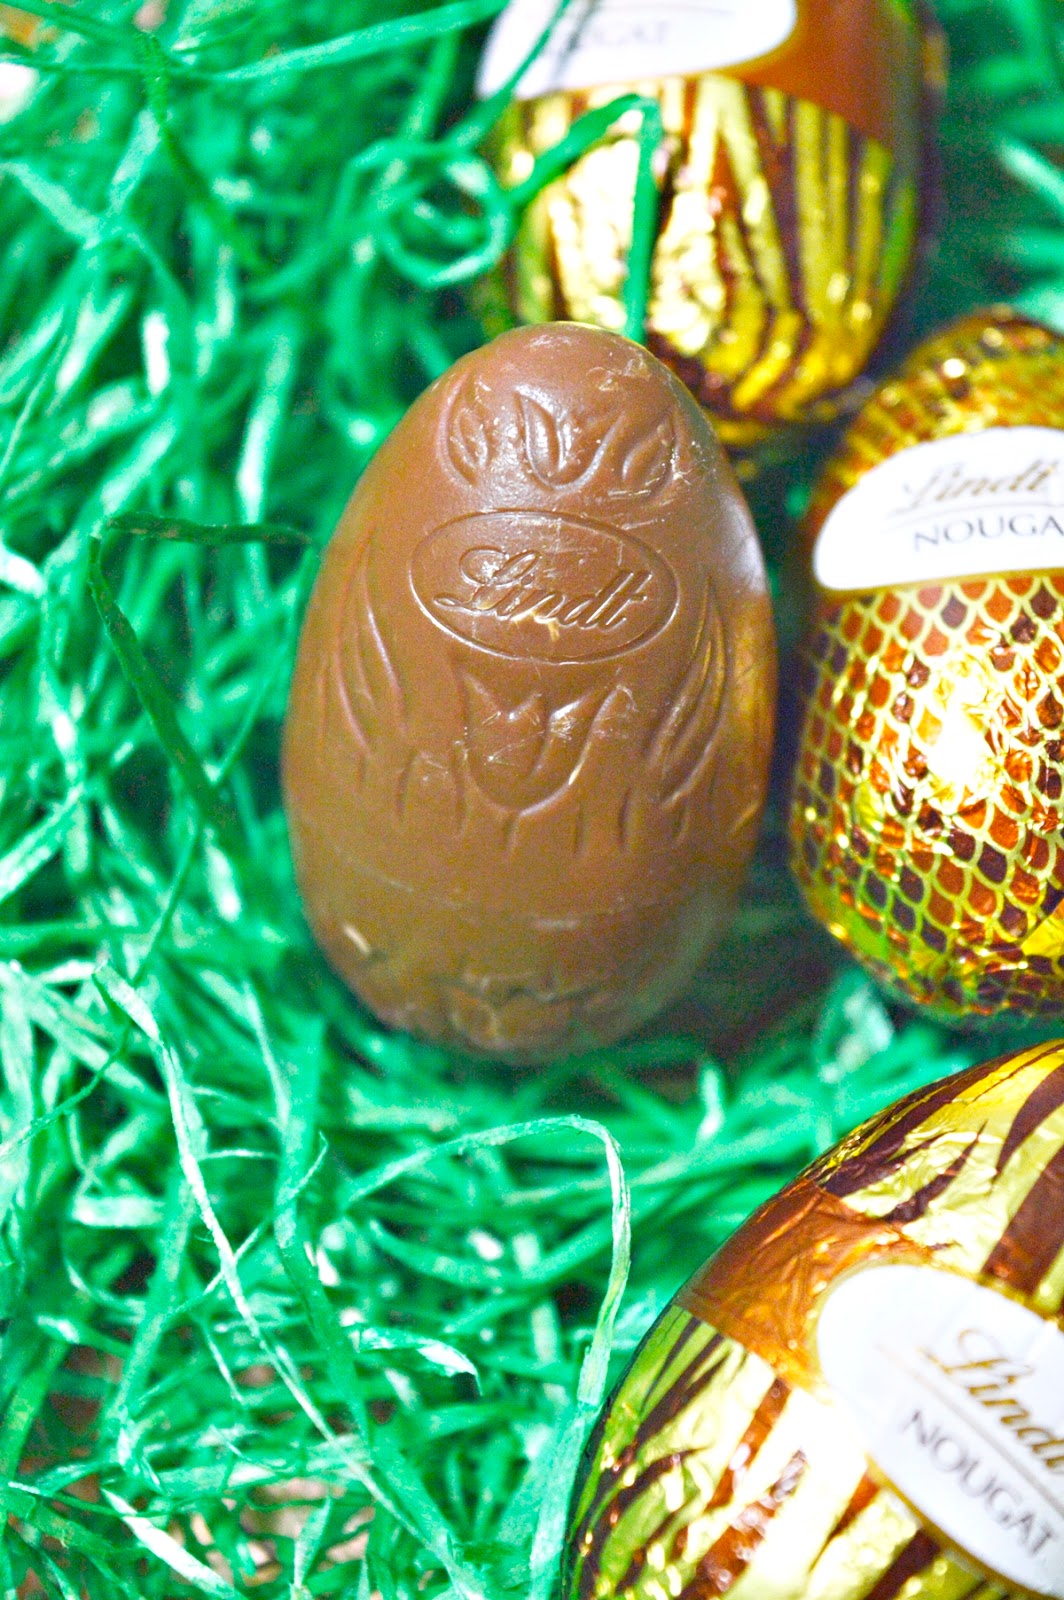 Easter bunny wears Animal Print Metall Egg with nougat eggs